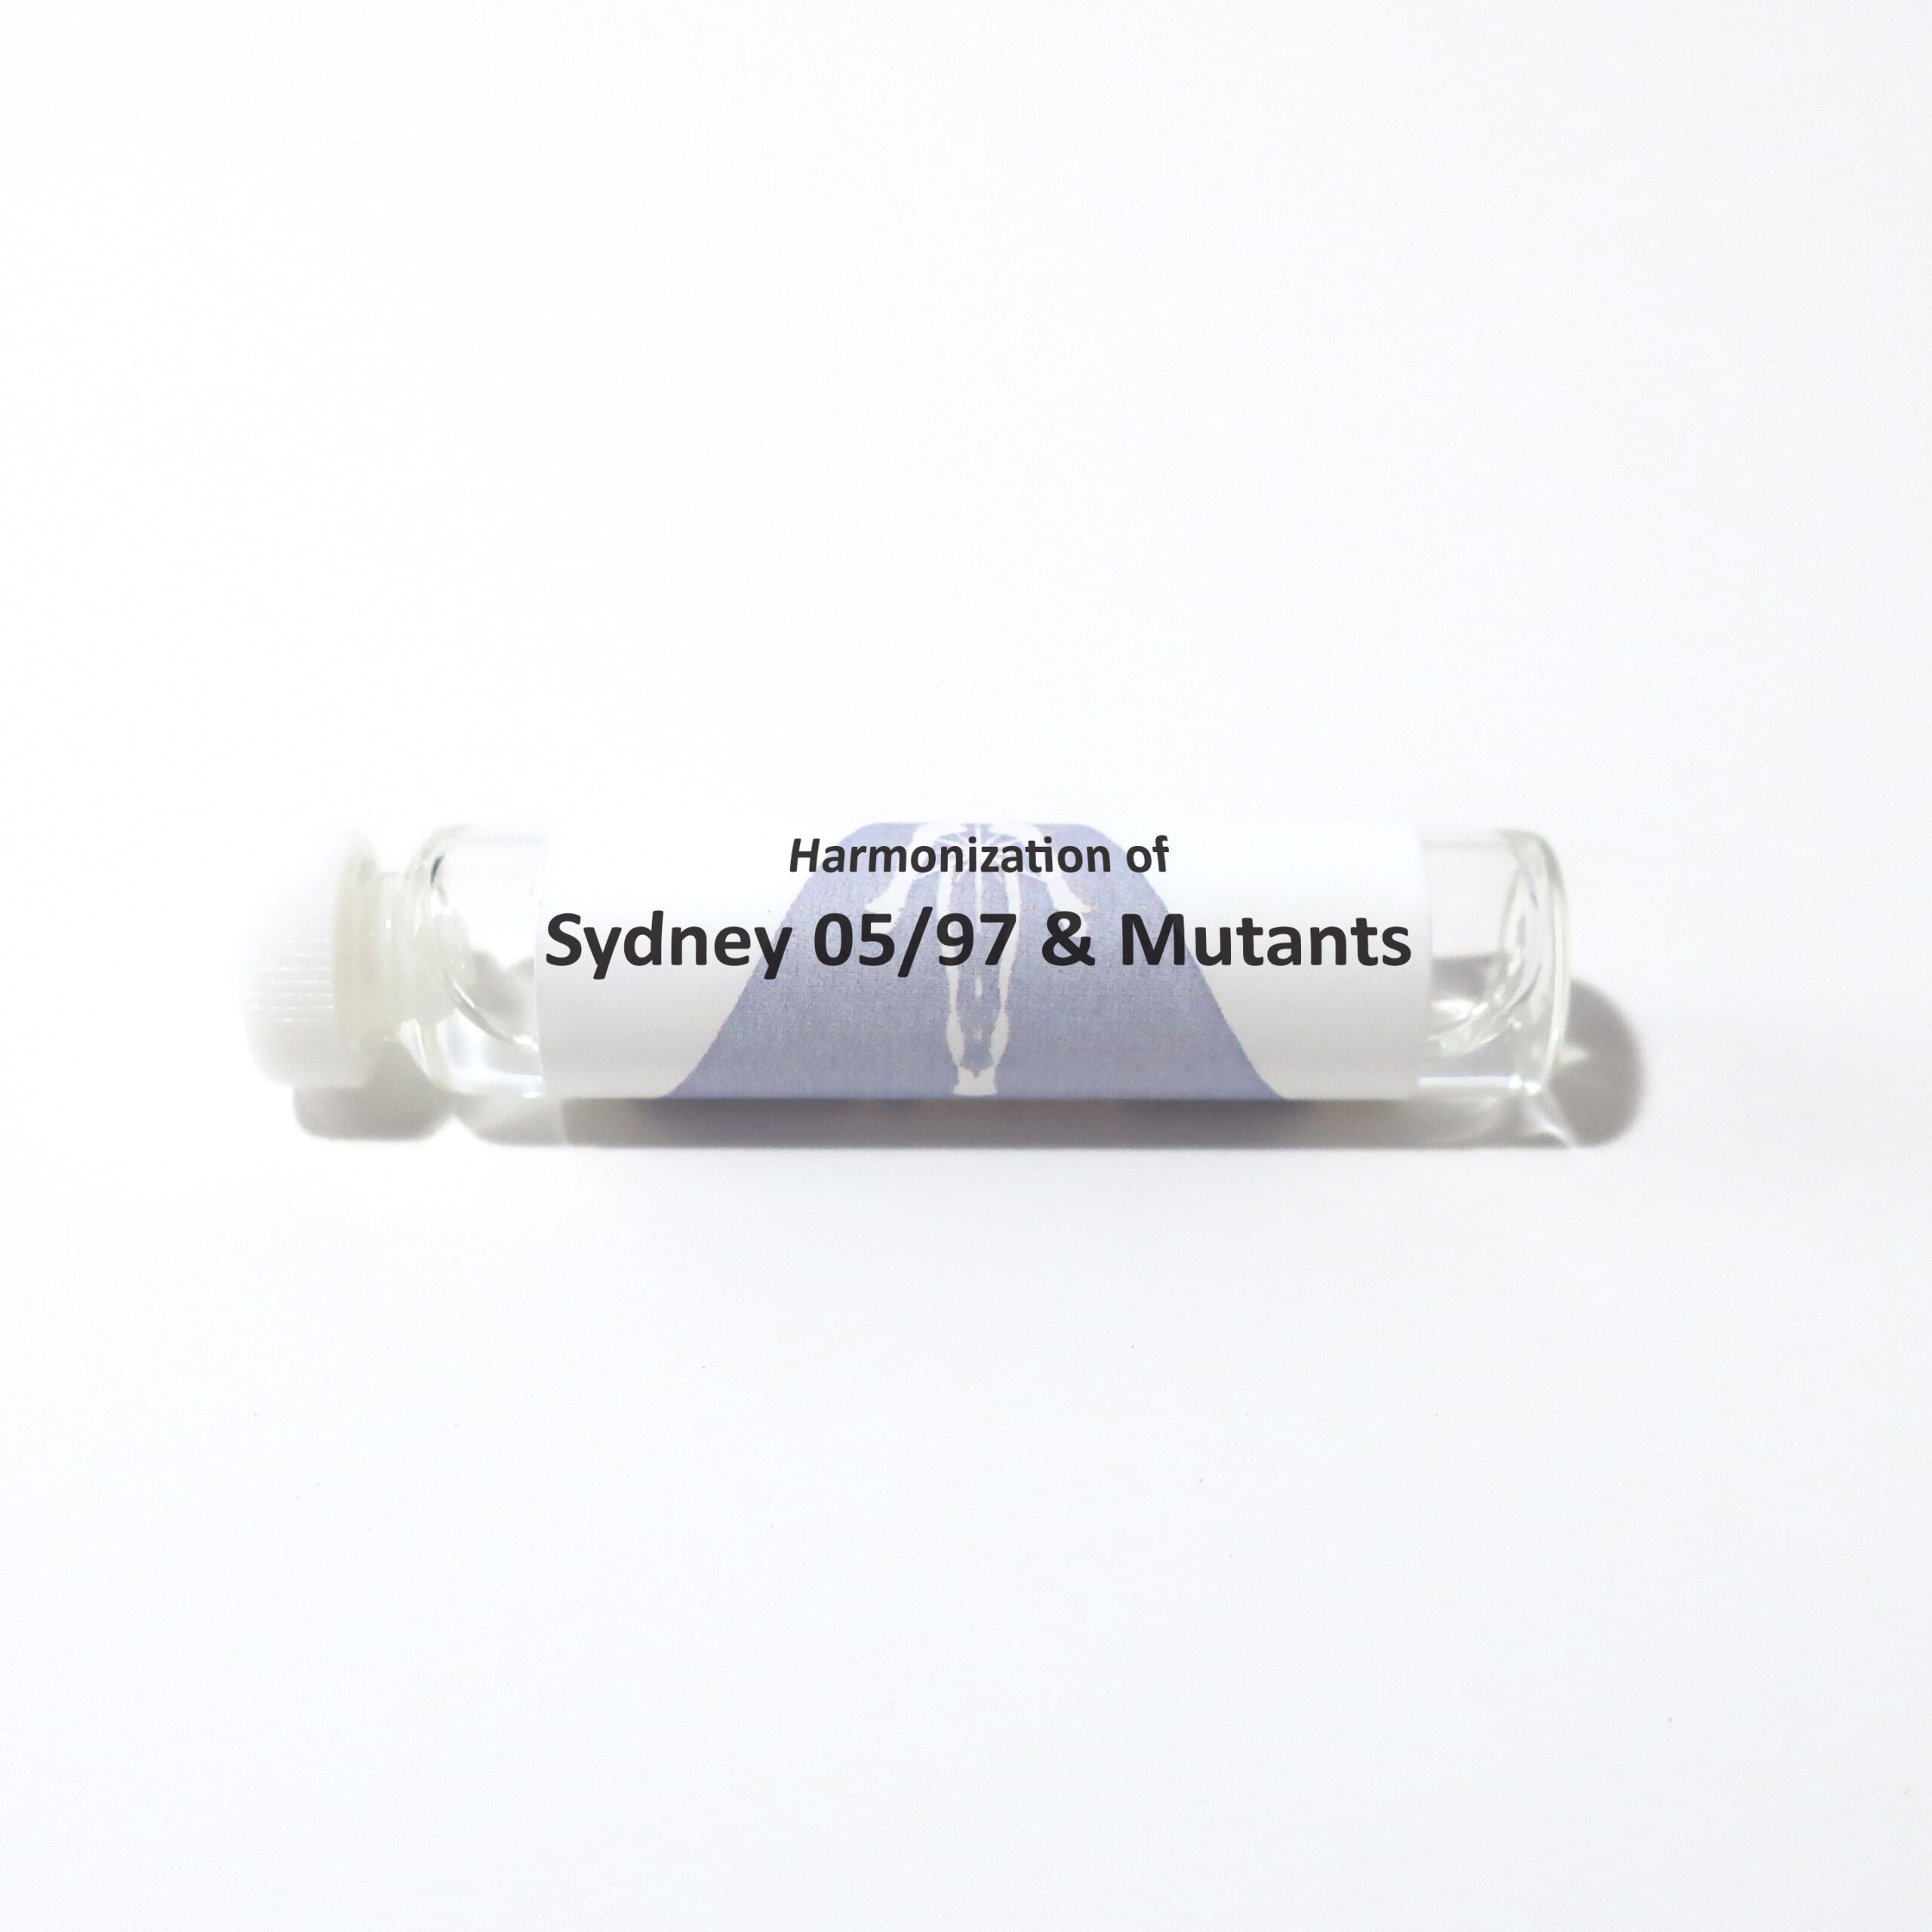 Sydney 05/97 & Mutants